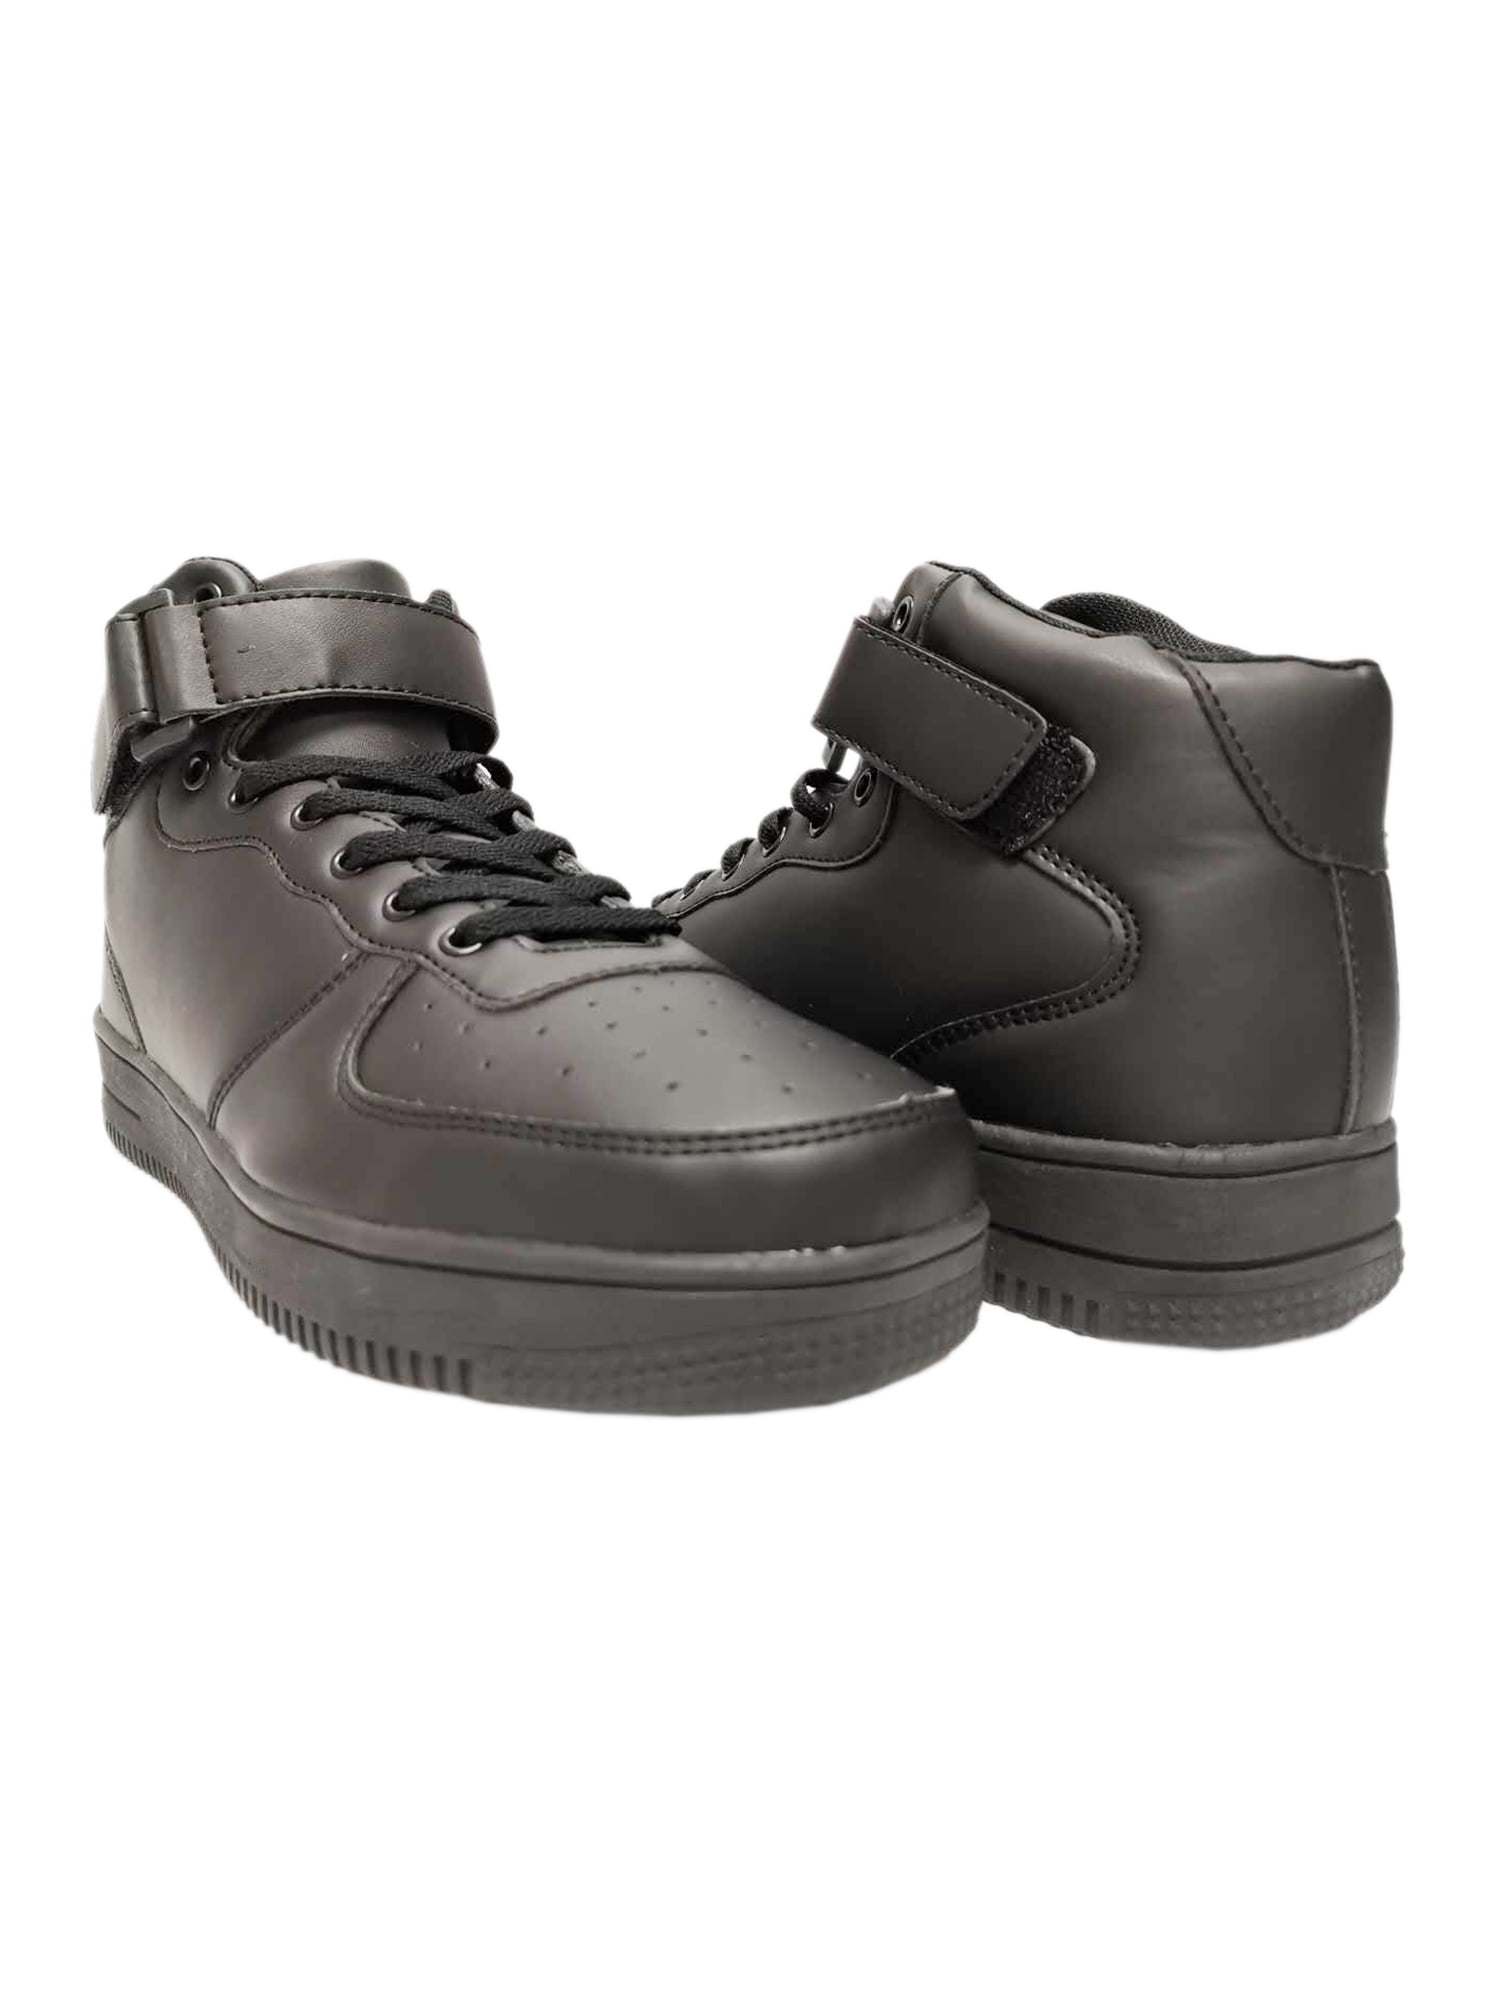 Buy > slip resistant shoes mens walmart > in stock